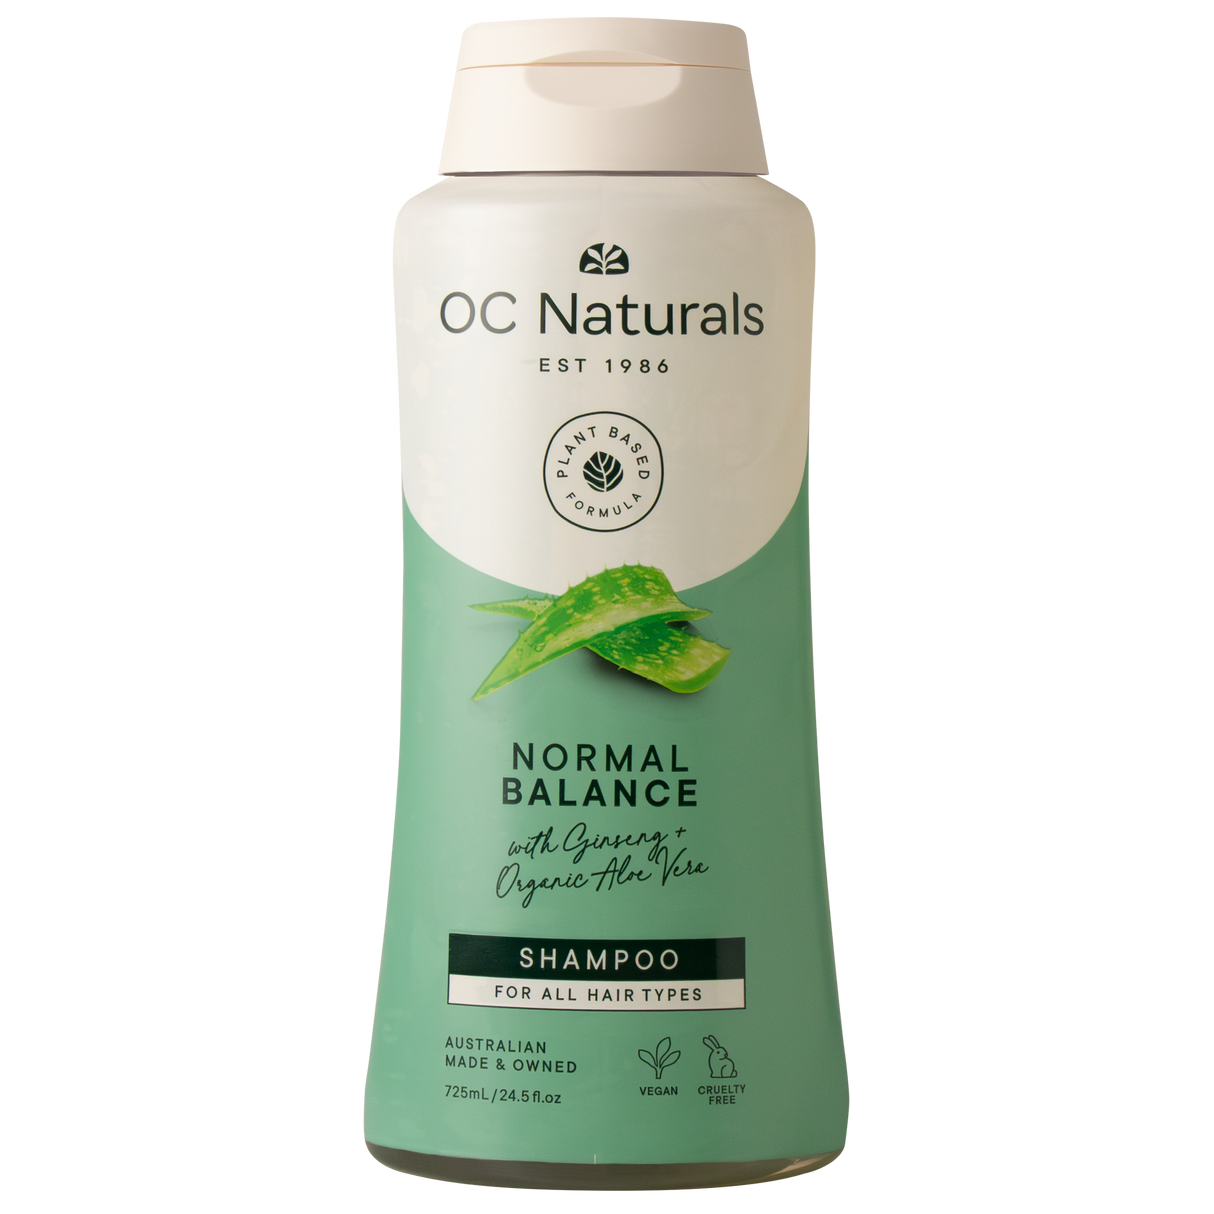 OC Naturals Normal Balance Shampoo 725ml